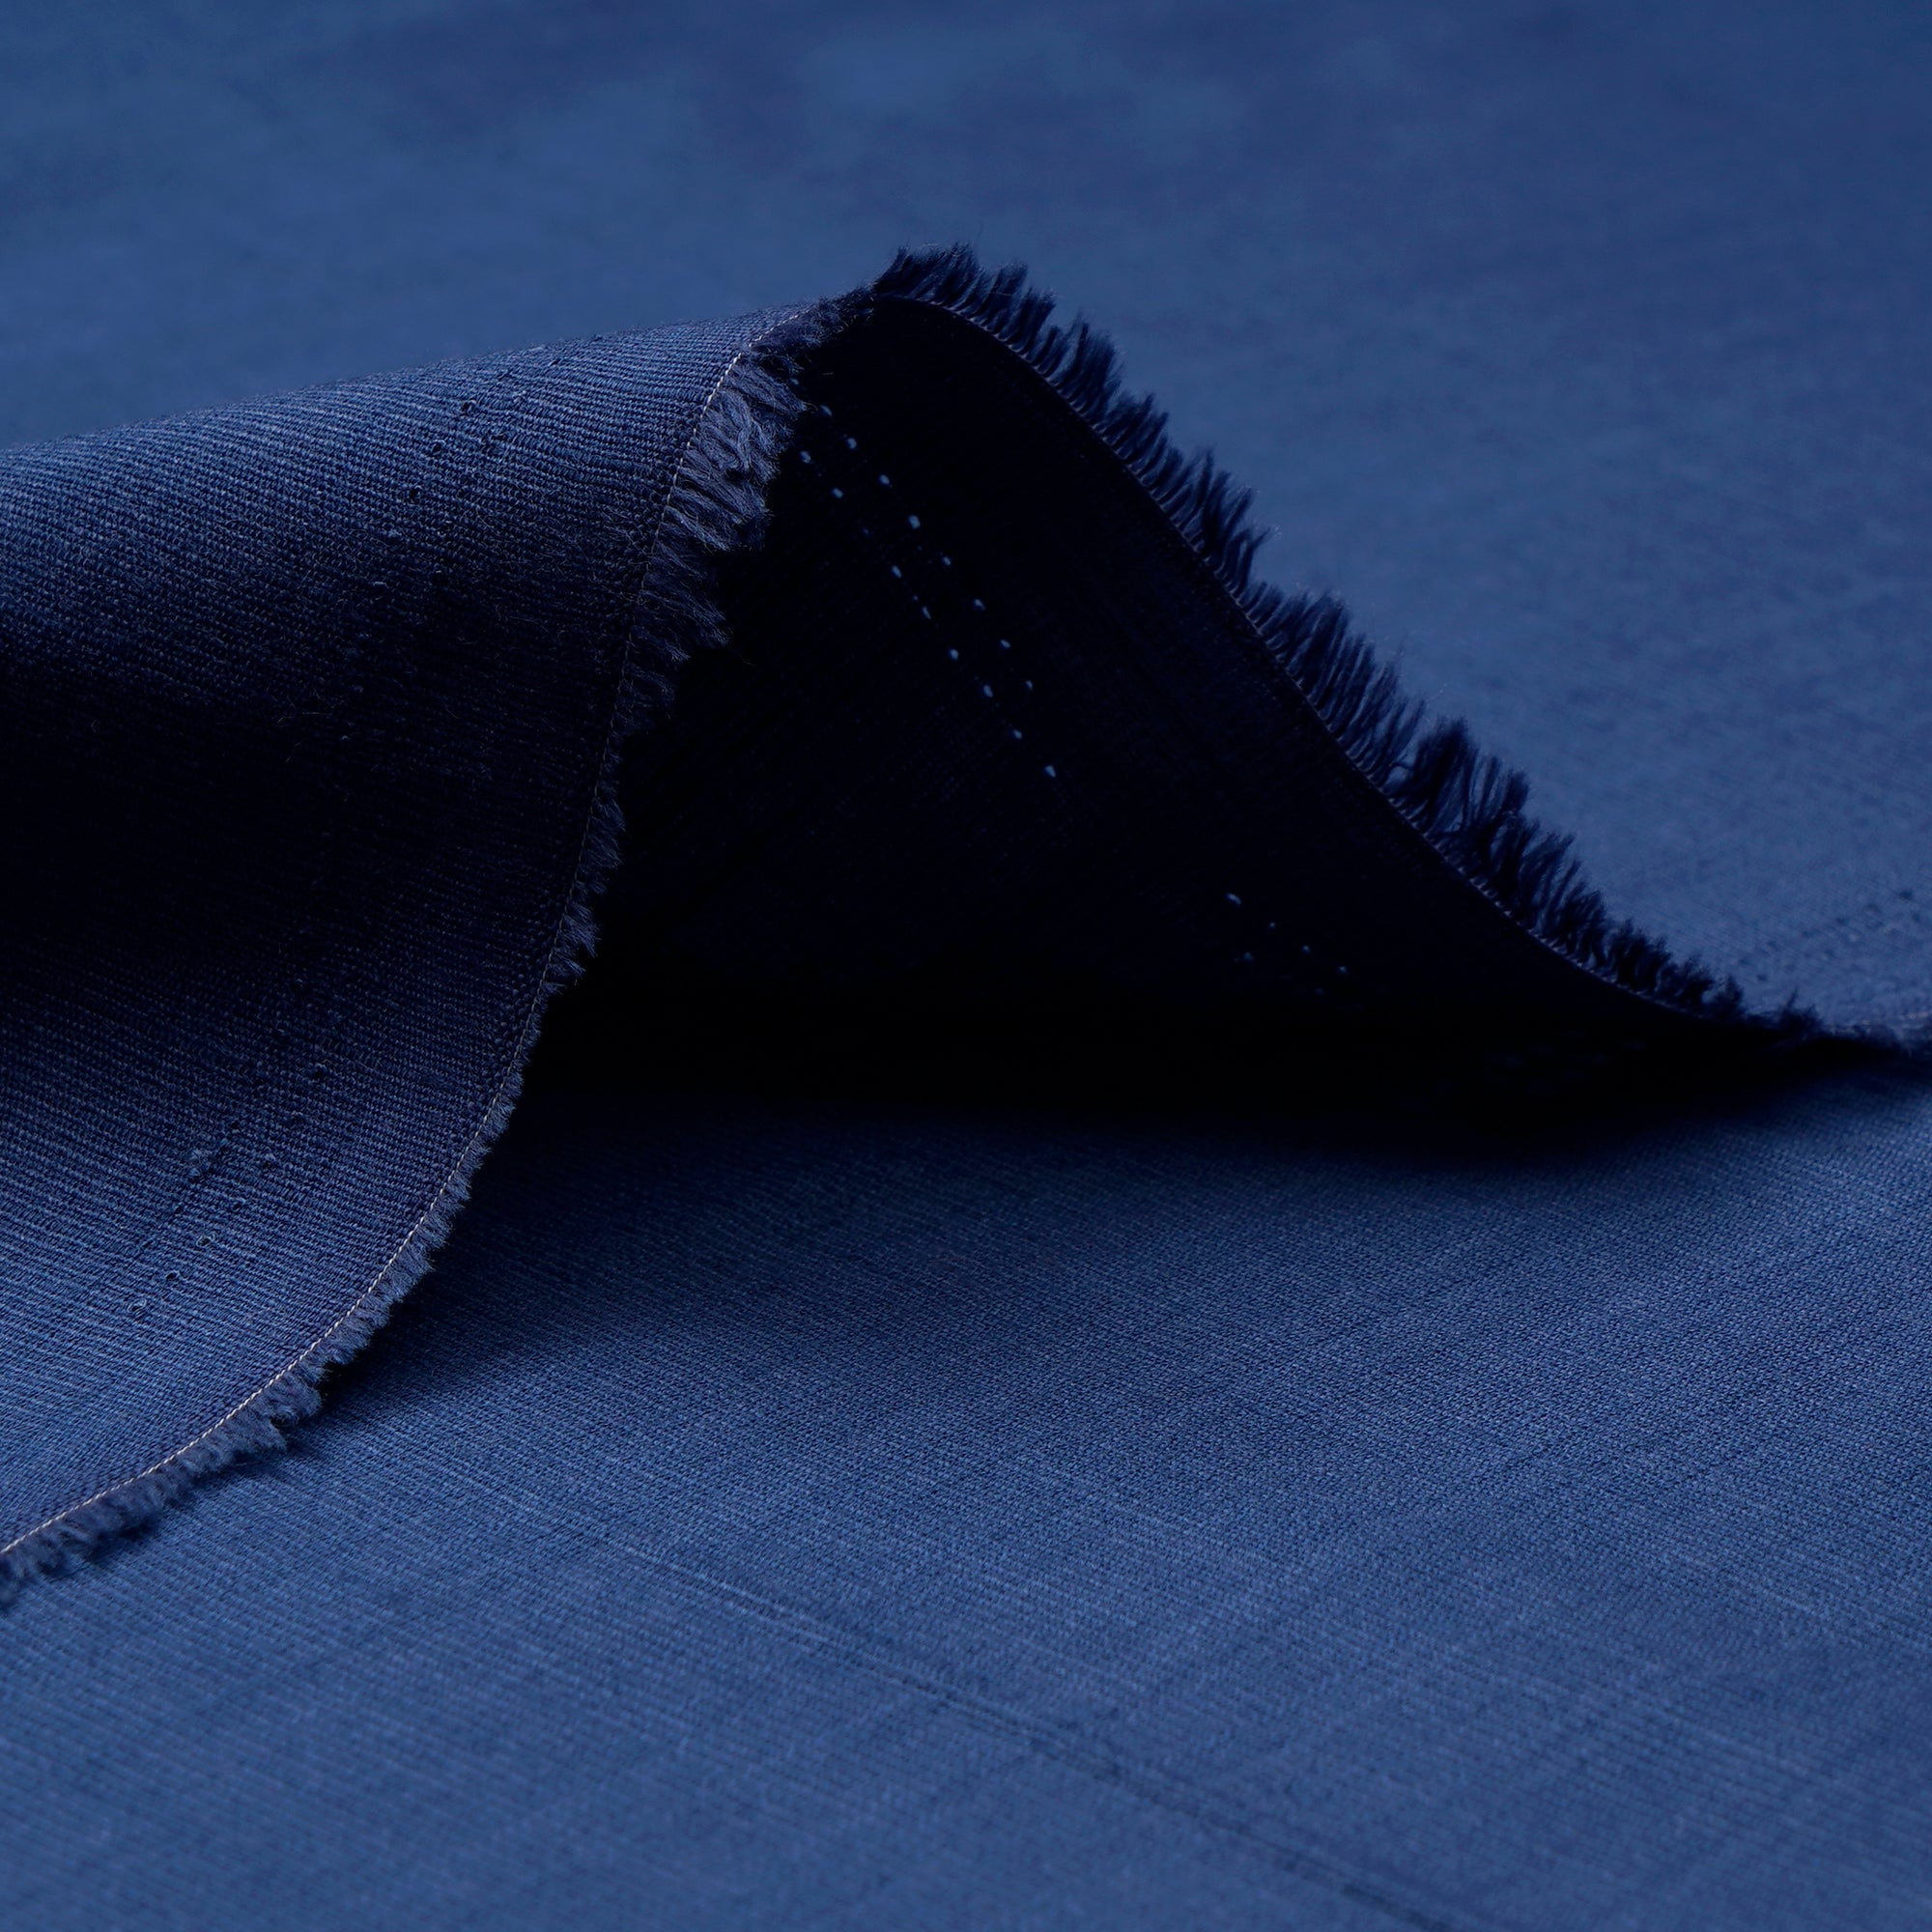 Navy Blue Stretch Viscose Lycra South Cotton Fabric